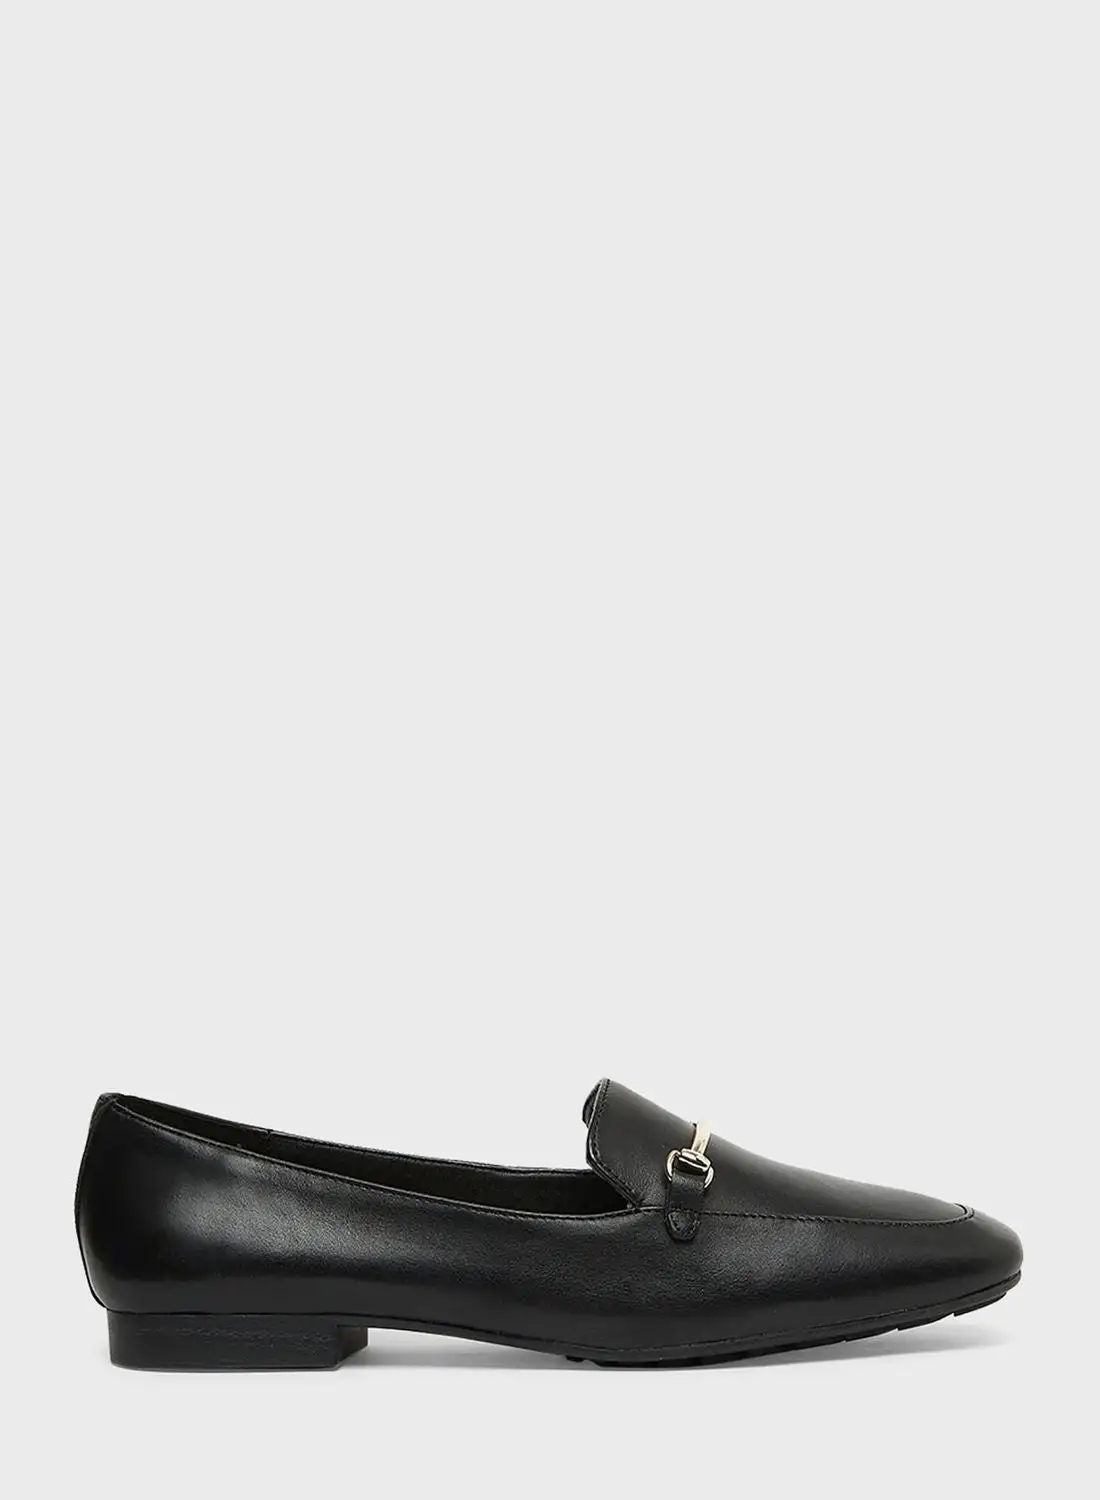 ALDO Harriot Leather Slip On Loafers